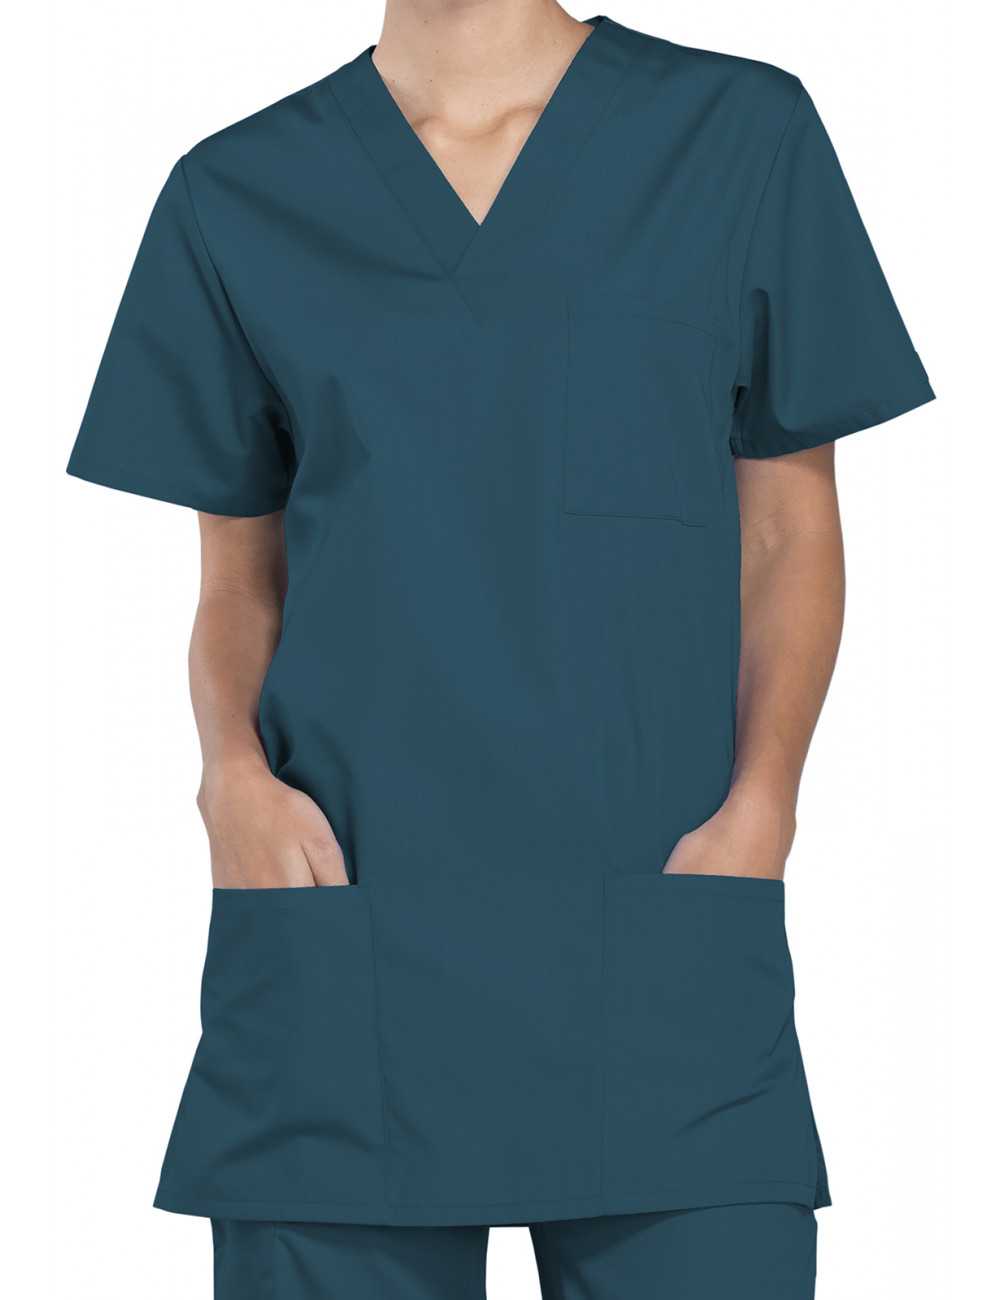 Women's Medical Gown, 3 pockets, Cherokee Workwear Originals (4876)